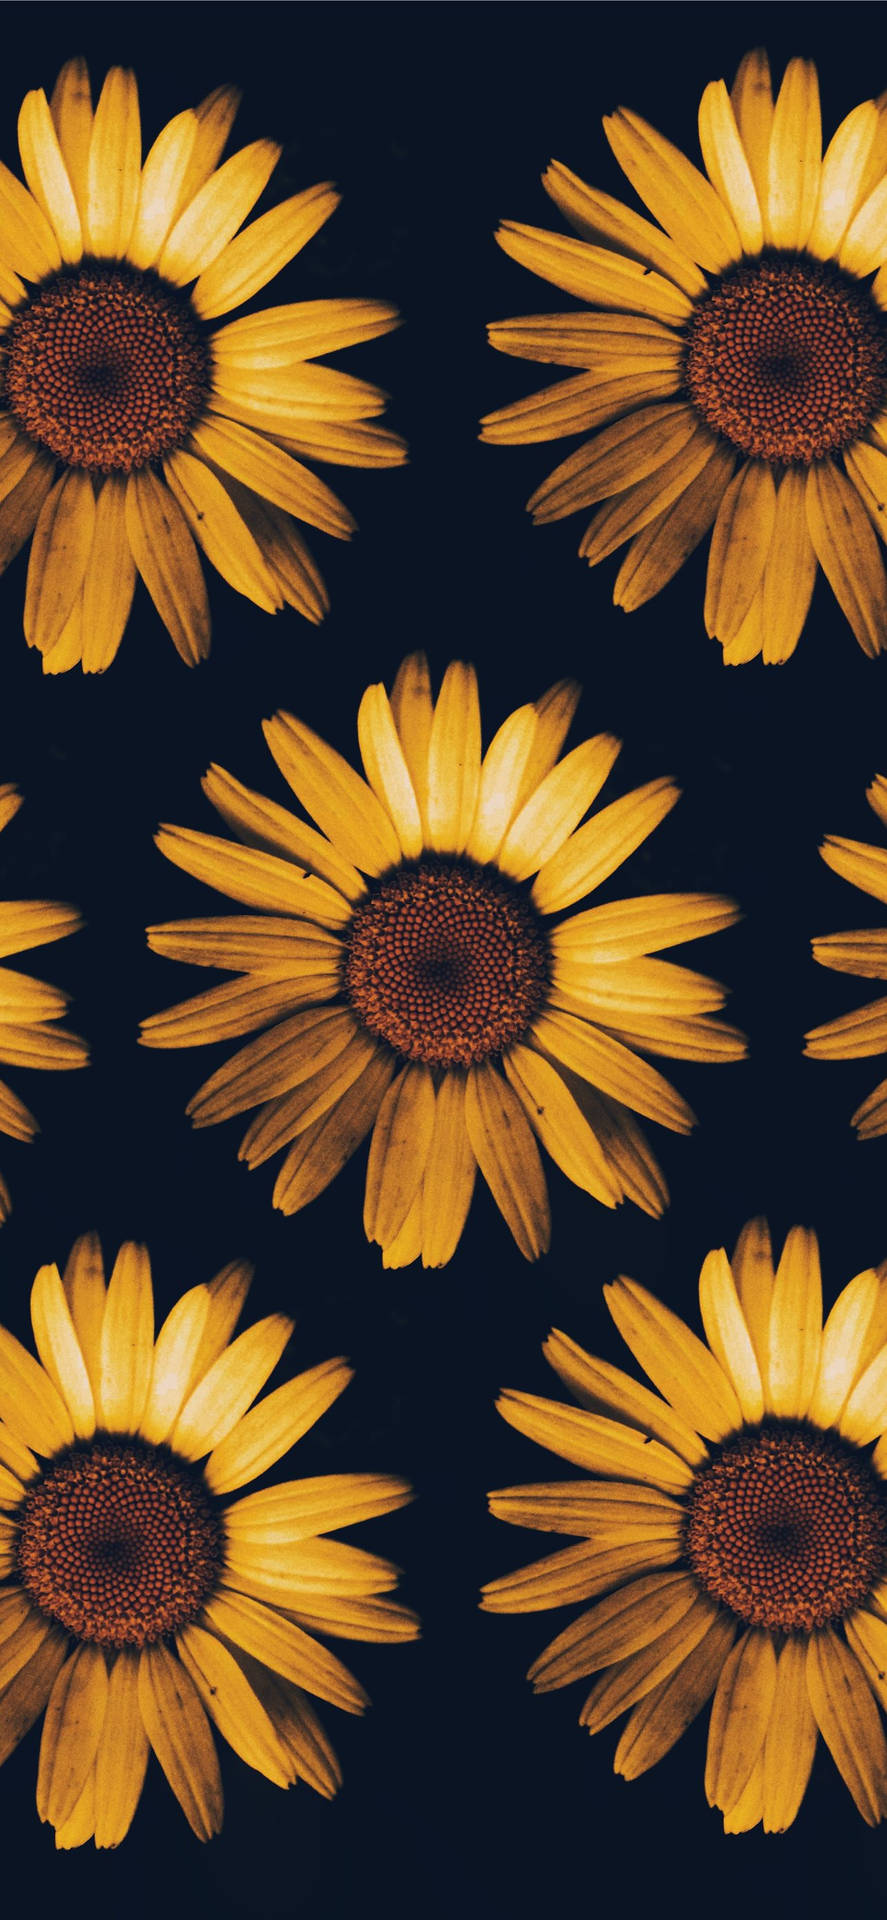 Free Sunflower iPhone Wallpaper Downloads, Sunflower iPhone Wallpaper for FREE